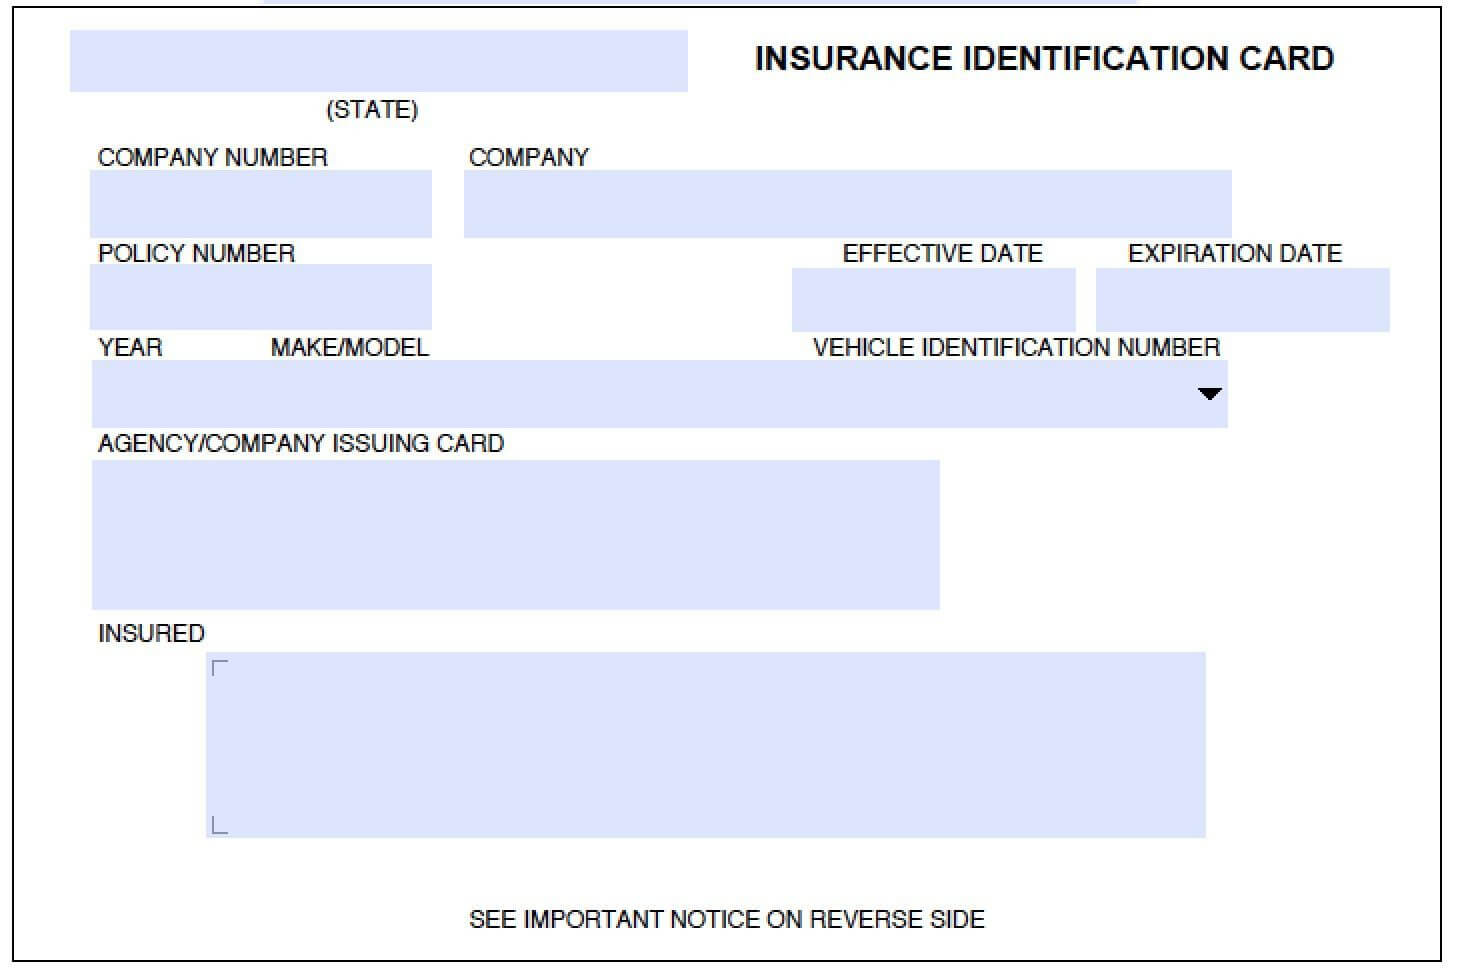 Download (Pdf) | Card Templates Free, Car Insurance For Free Fake Auto Insurance Card Template